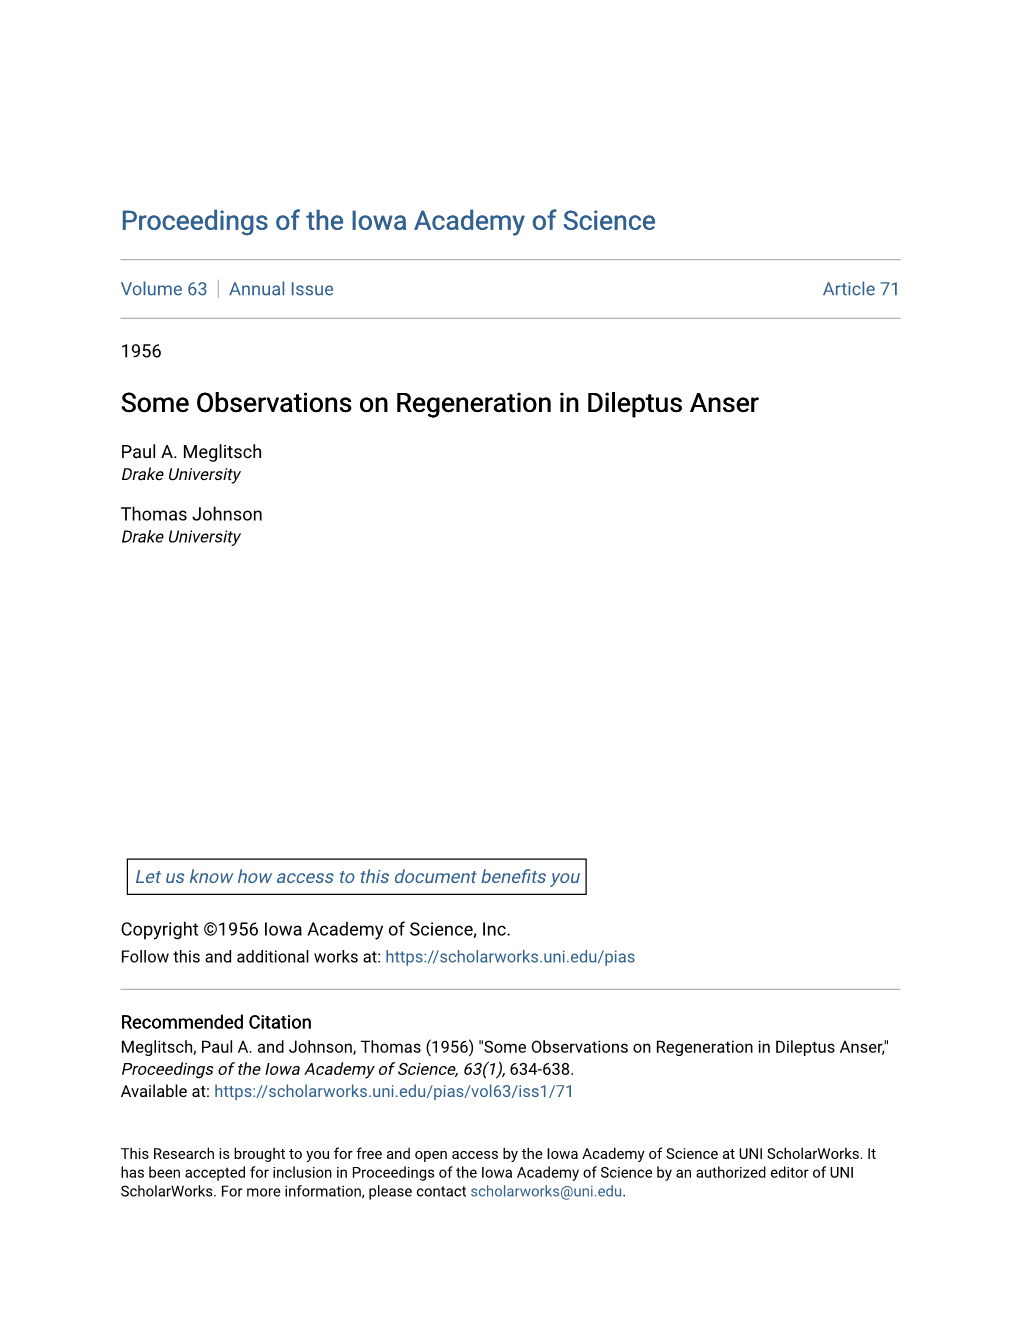 Some Observations on Regeneration in Dileptus Anser